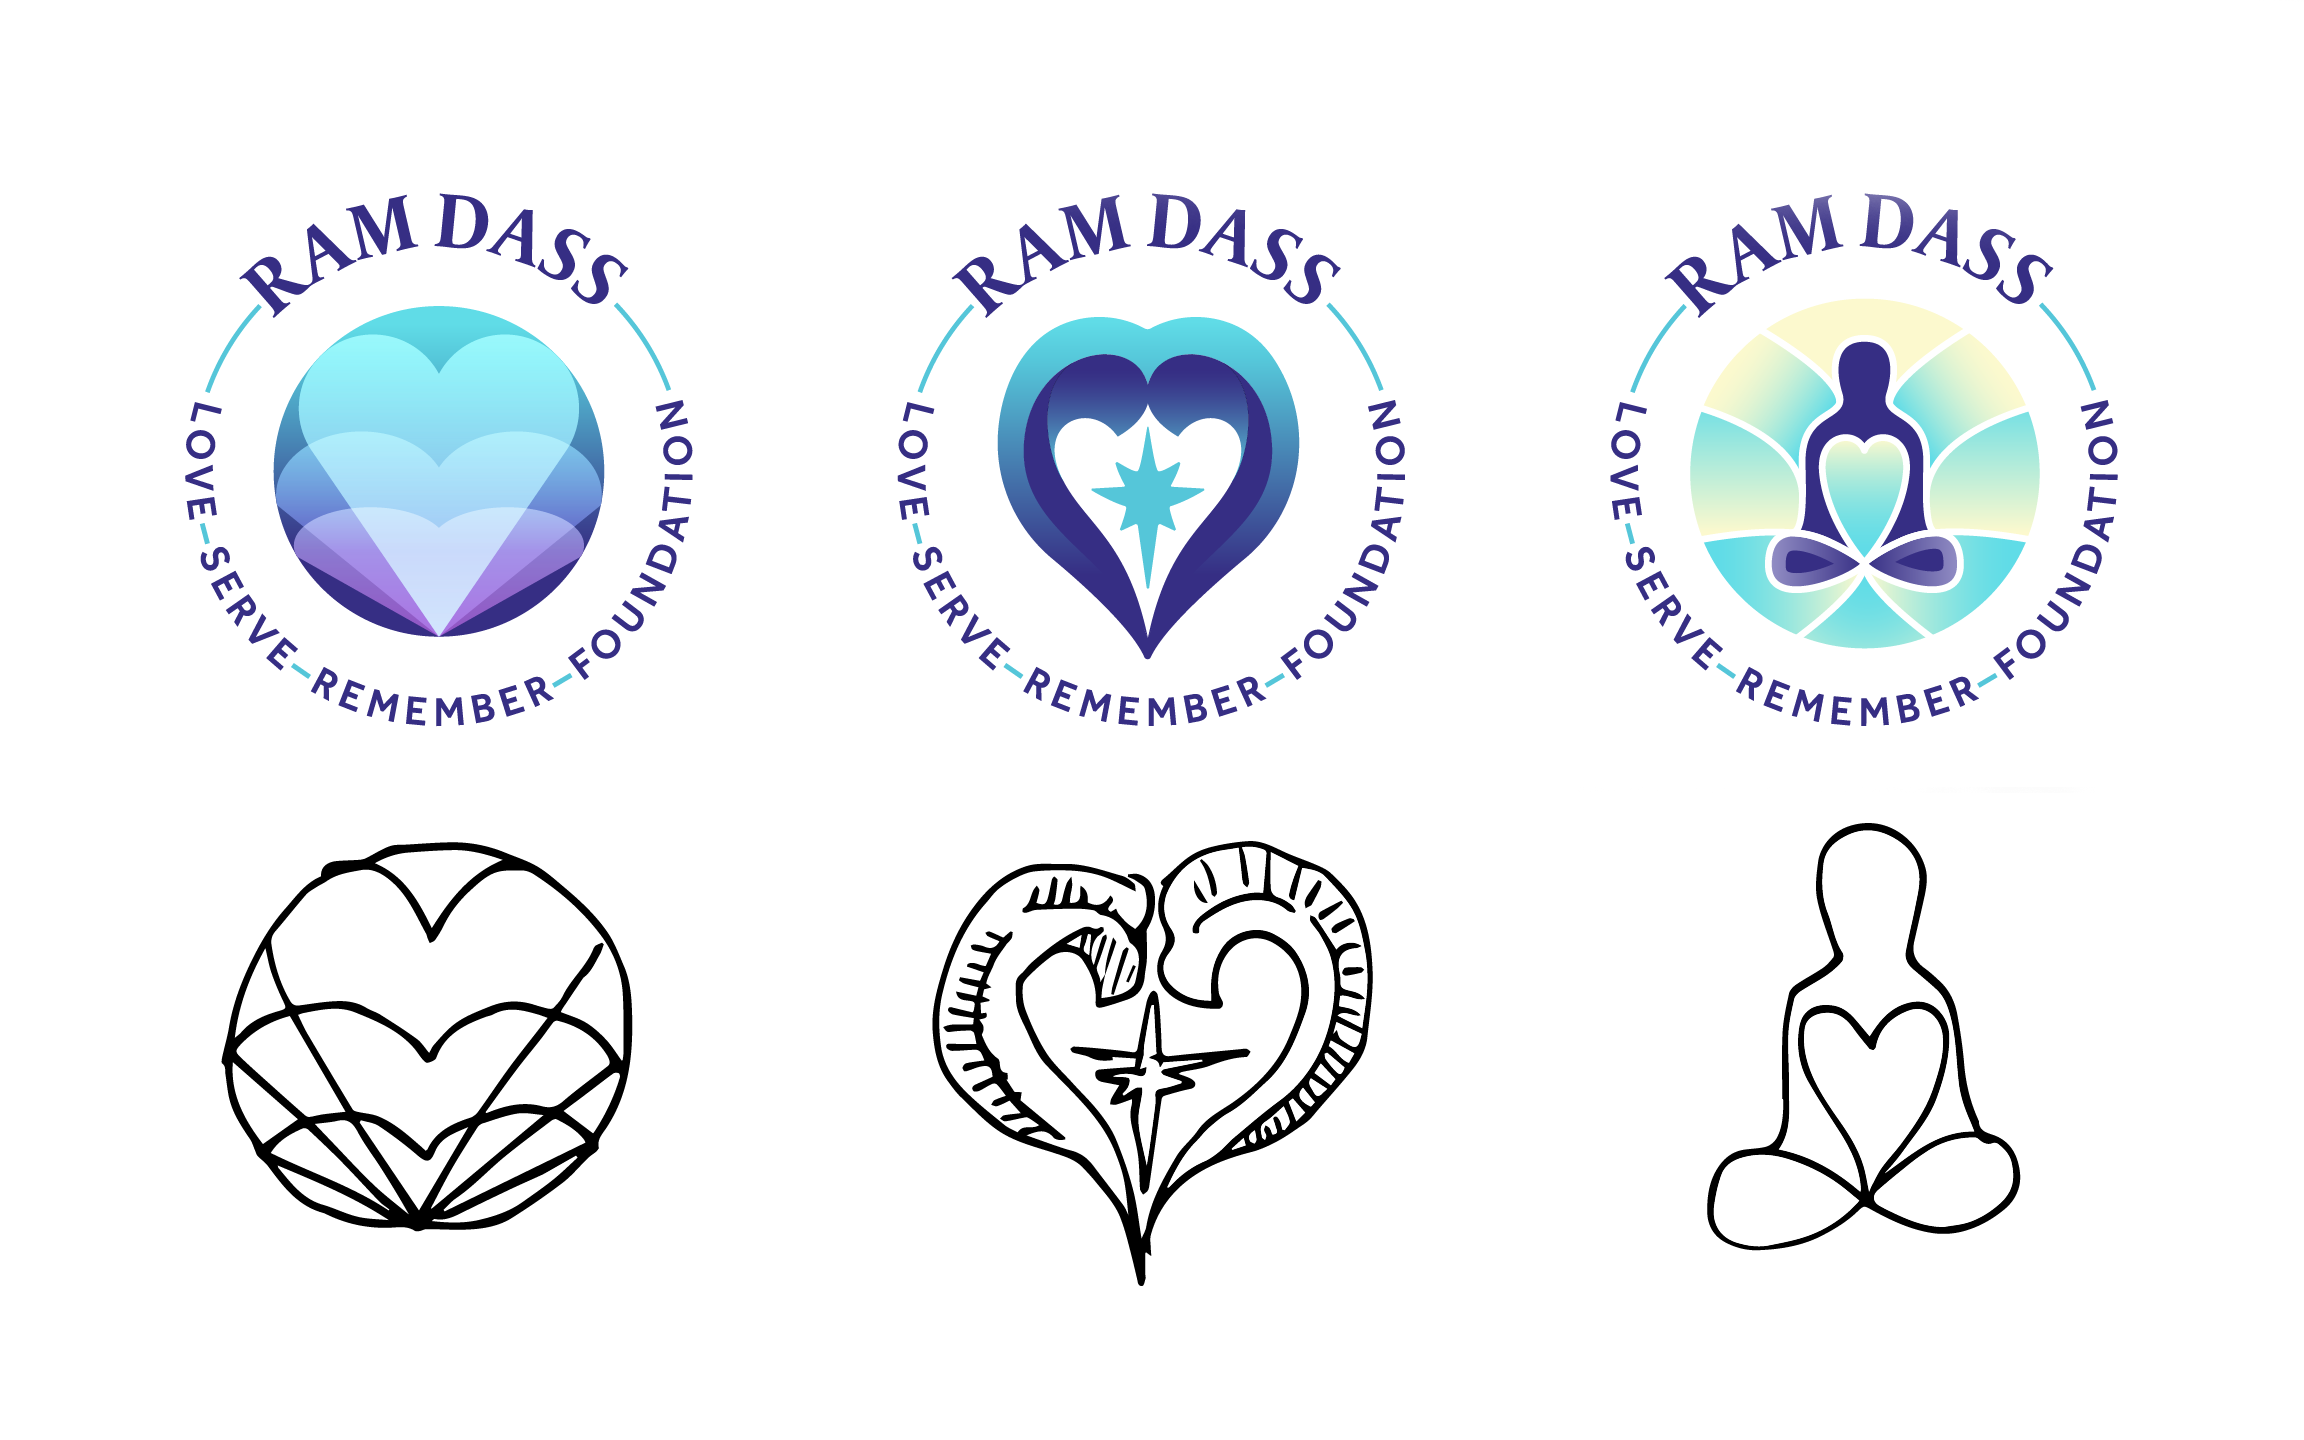 Ram Dass / Love Foundation — Miles Seiden Creative